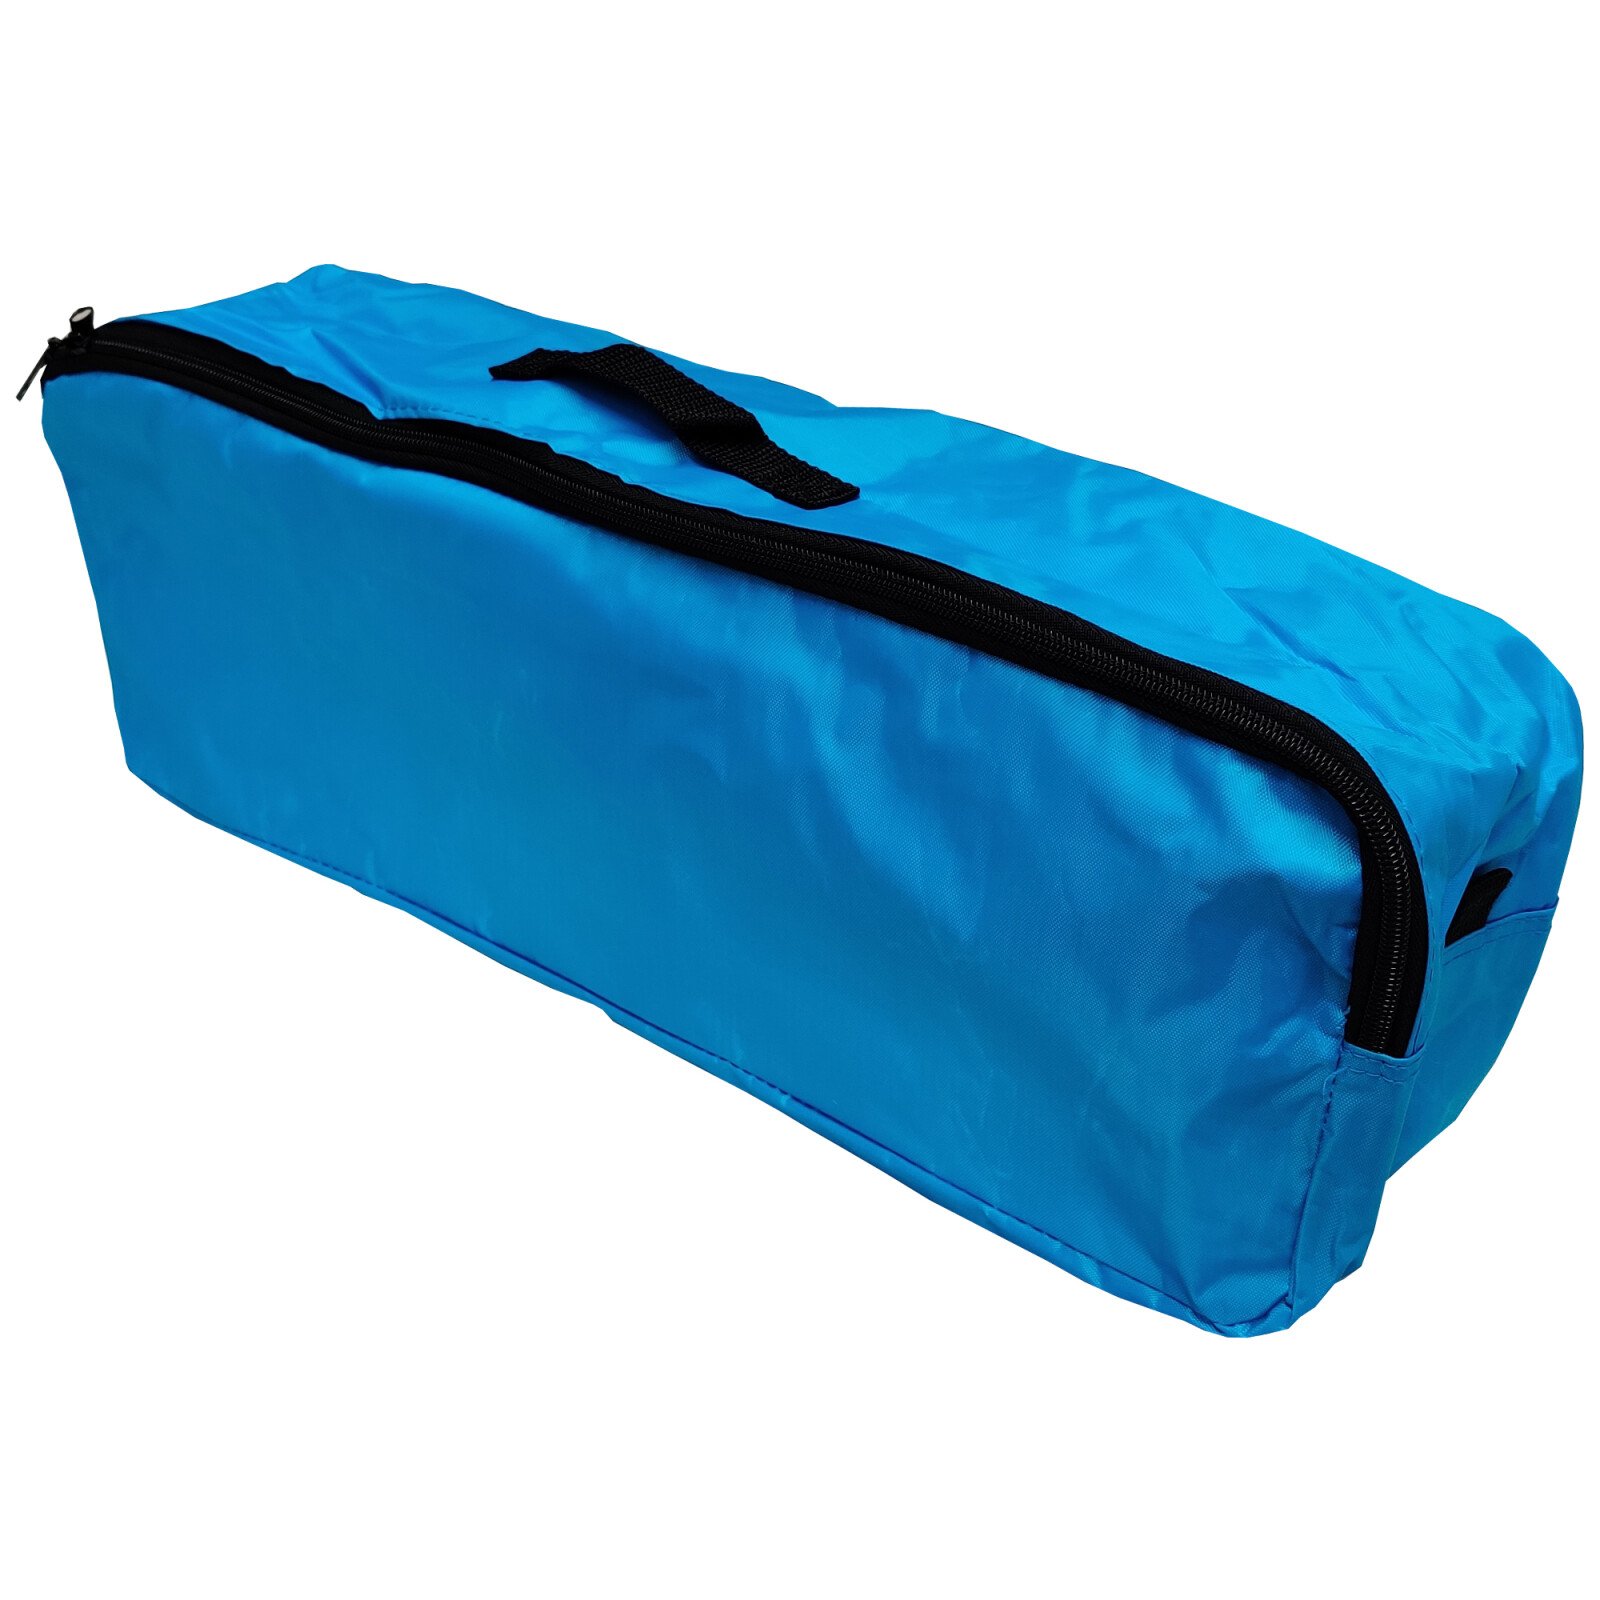 Cridem trunk organizer bag - Blue/Black thumb